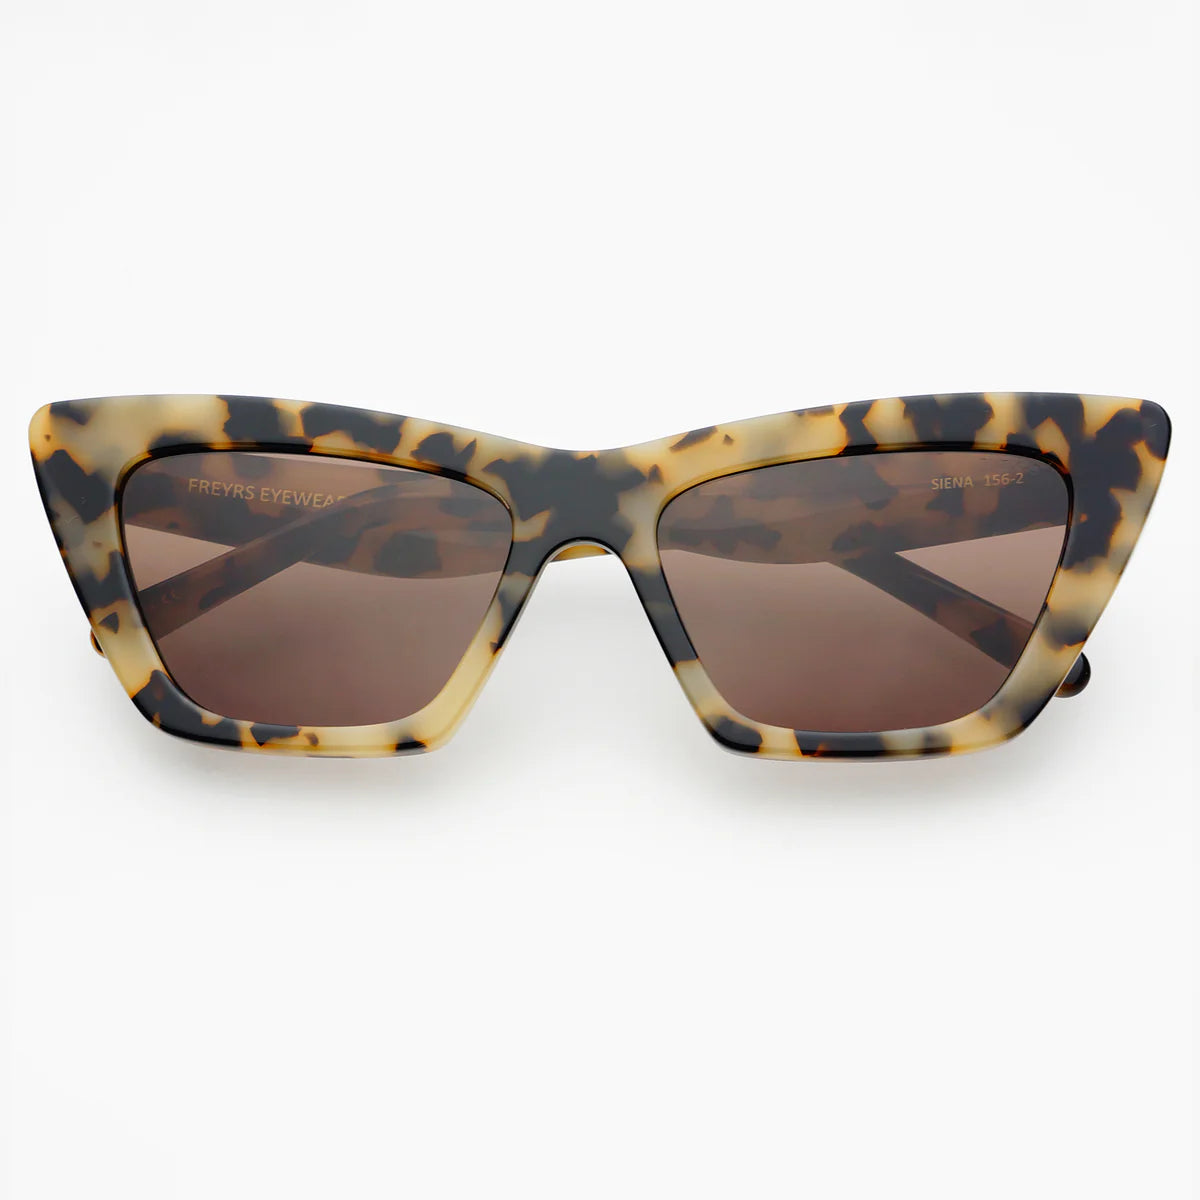 Sunglasses- Siena Milky Tortoise (156-2)